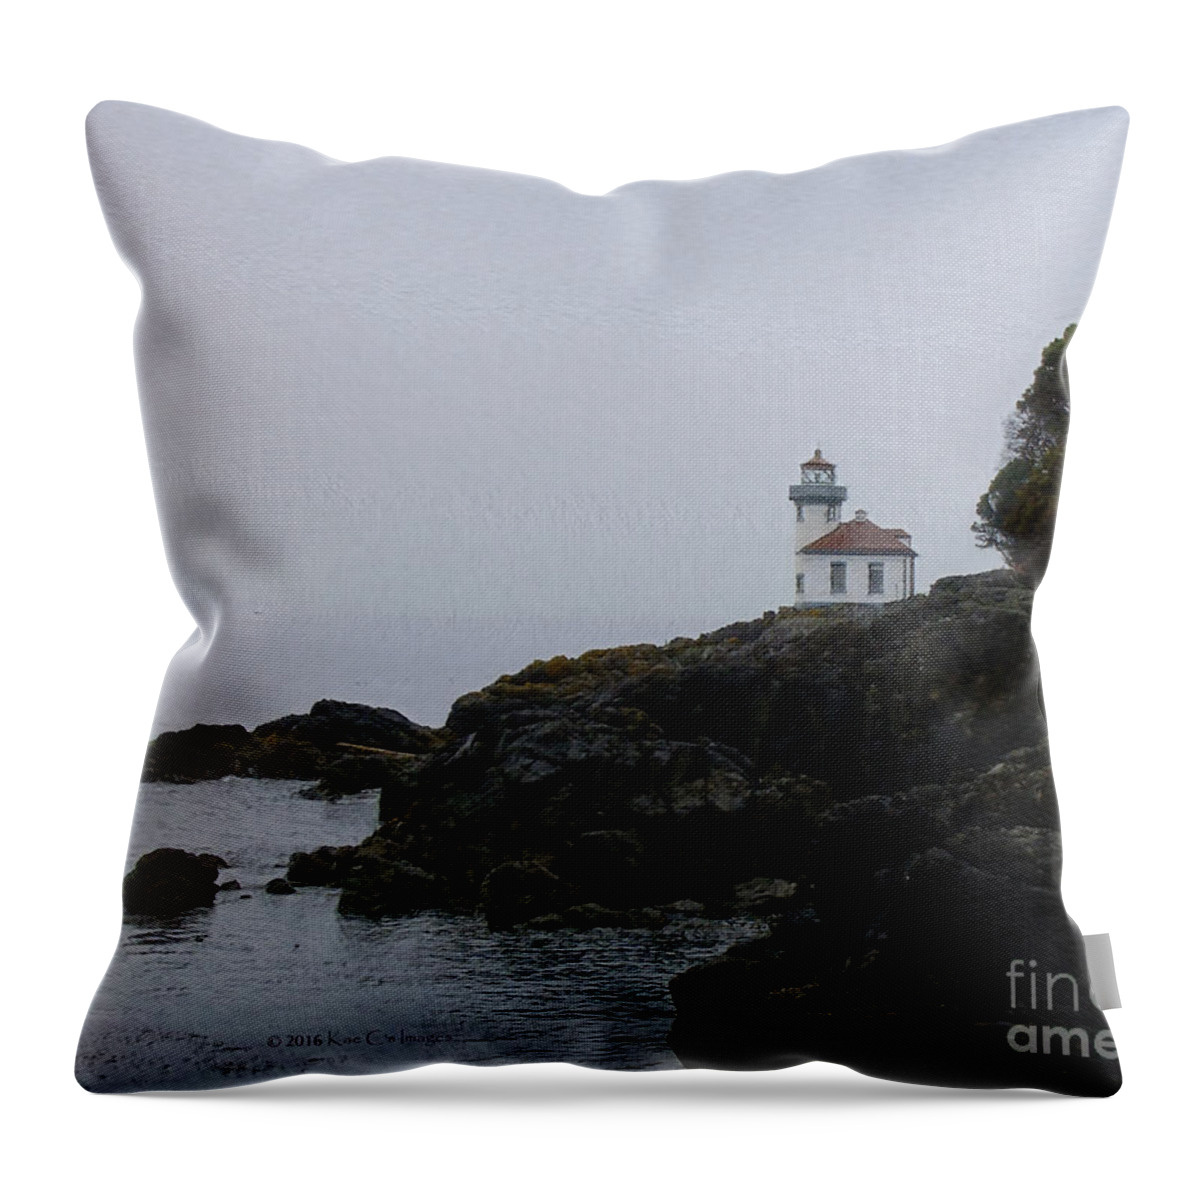 Lighthouse Throw Pillow featuring the photograph Lighthouse on Rainy Day by Kae Cheatham